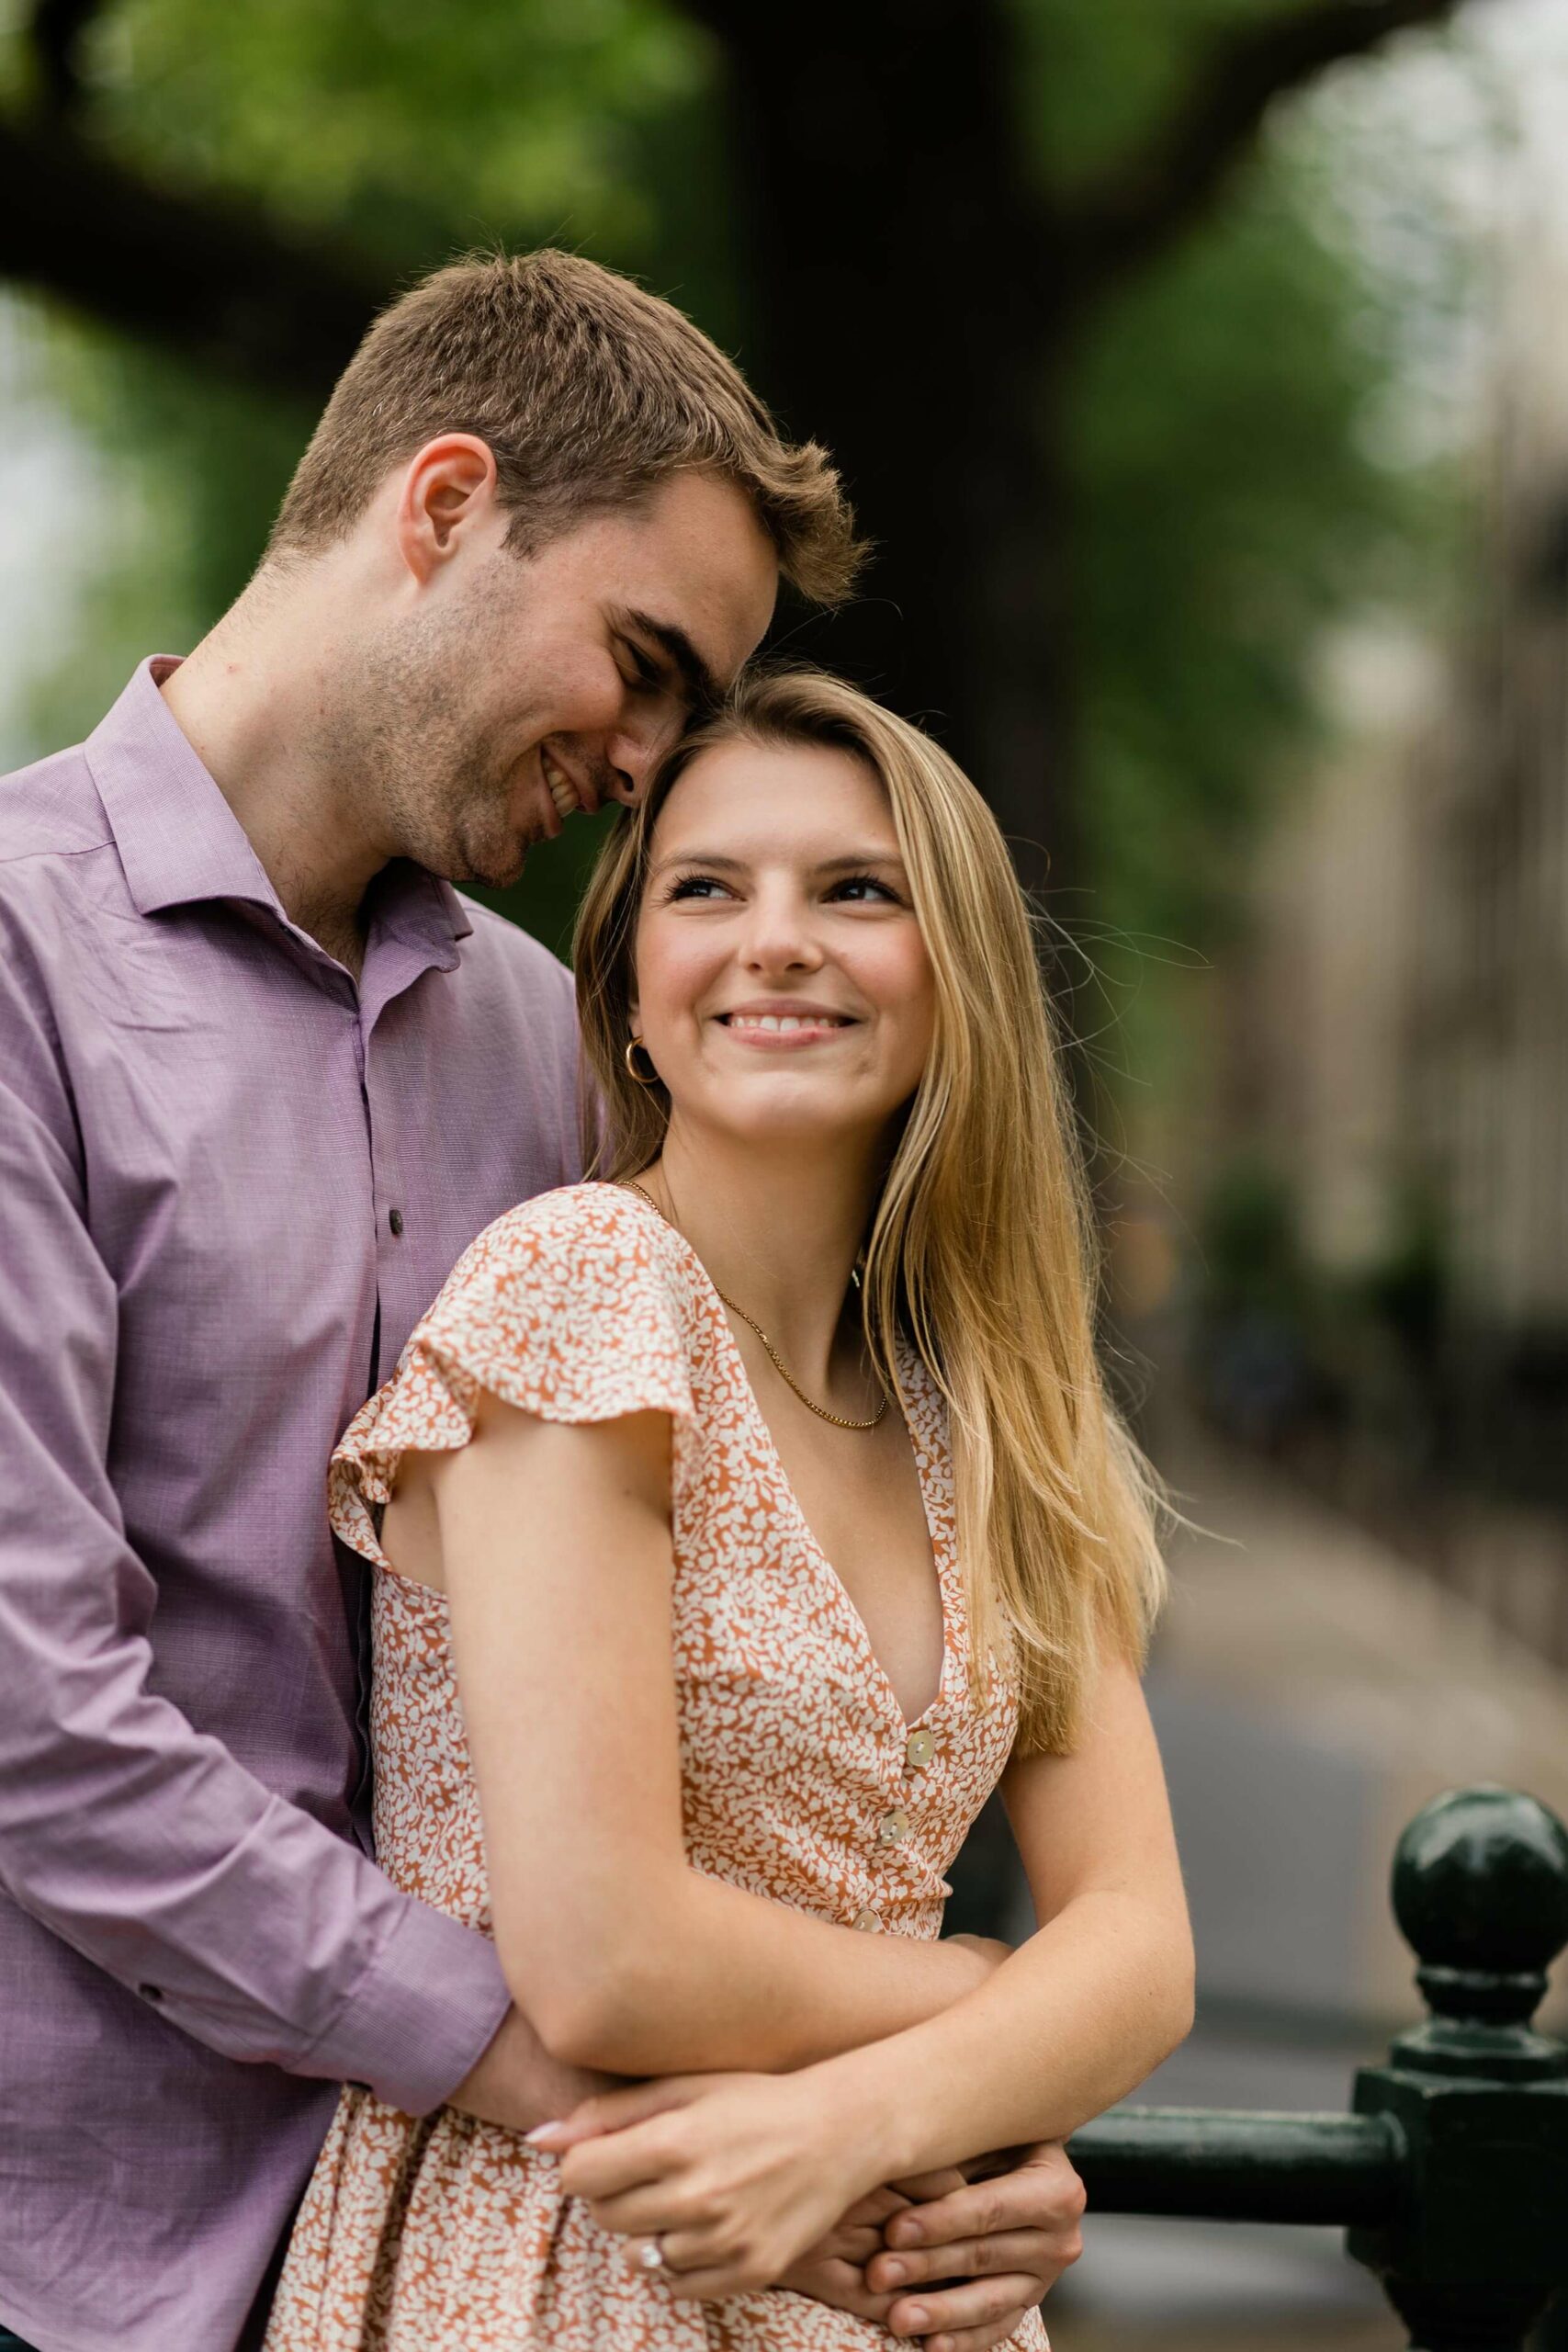 alt="Summer engagement couples photoshoot in Amsterdam Brouwersgracht"